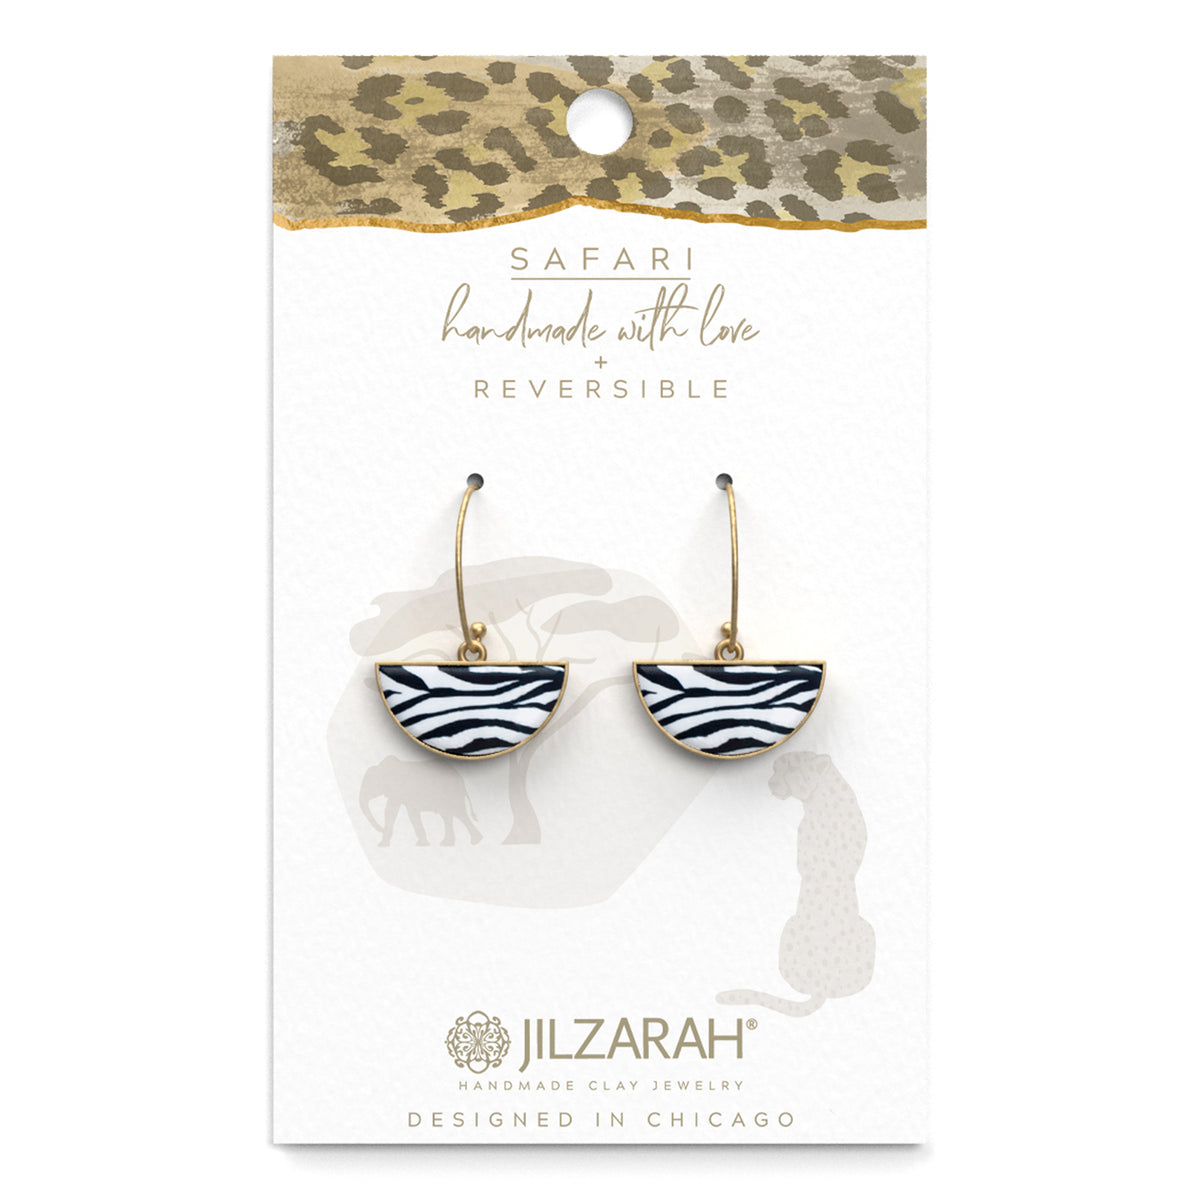 Safari Reversible Half Shell Earrings